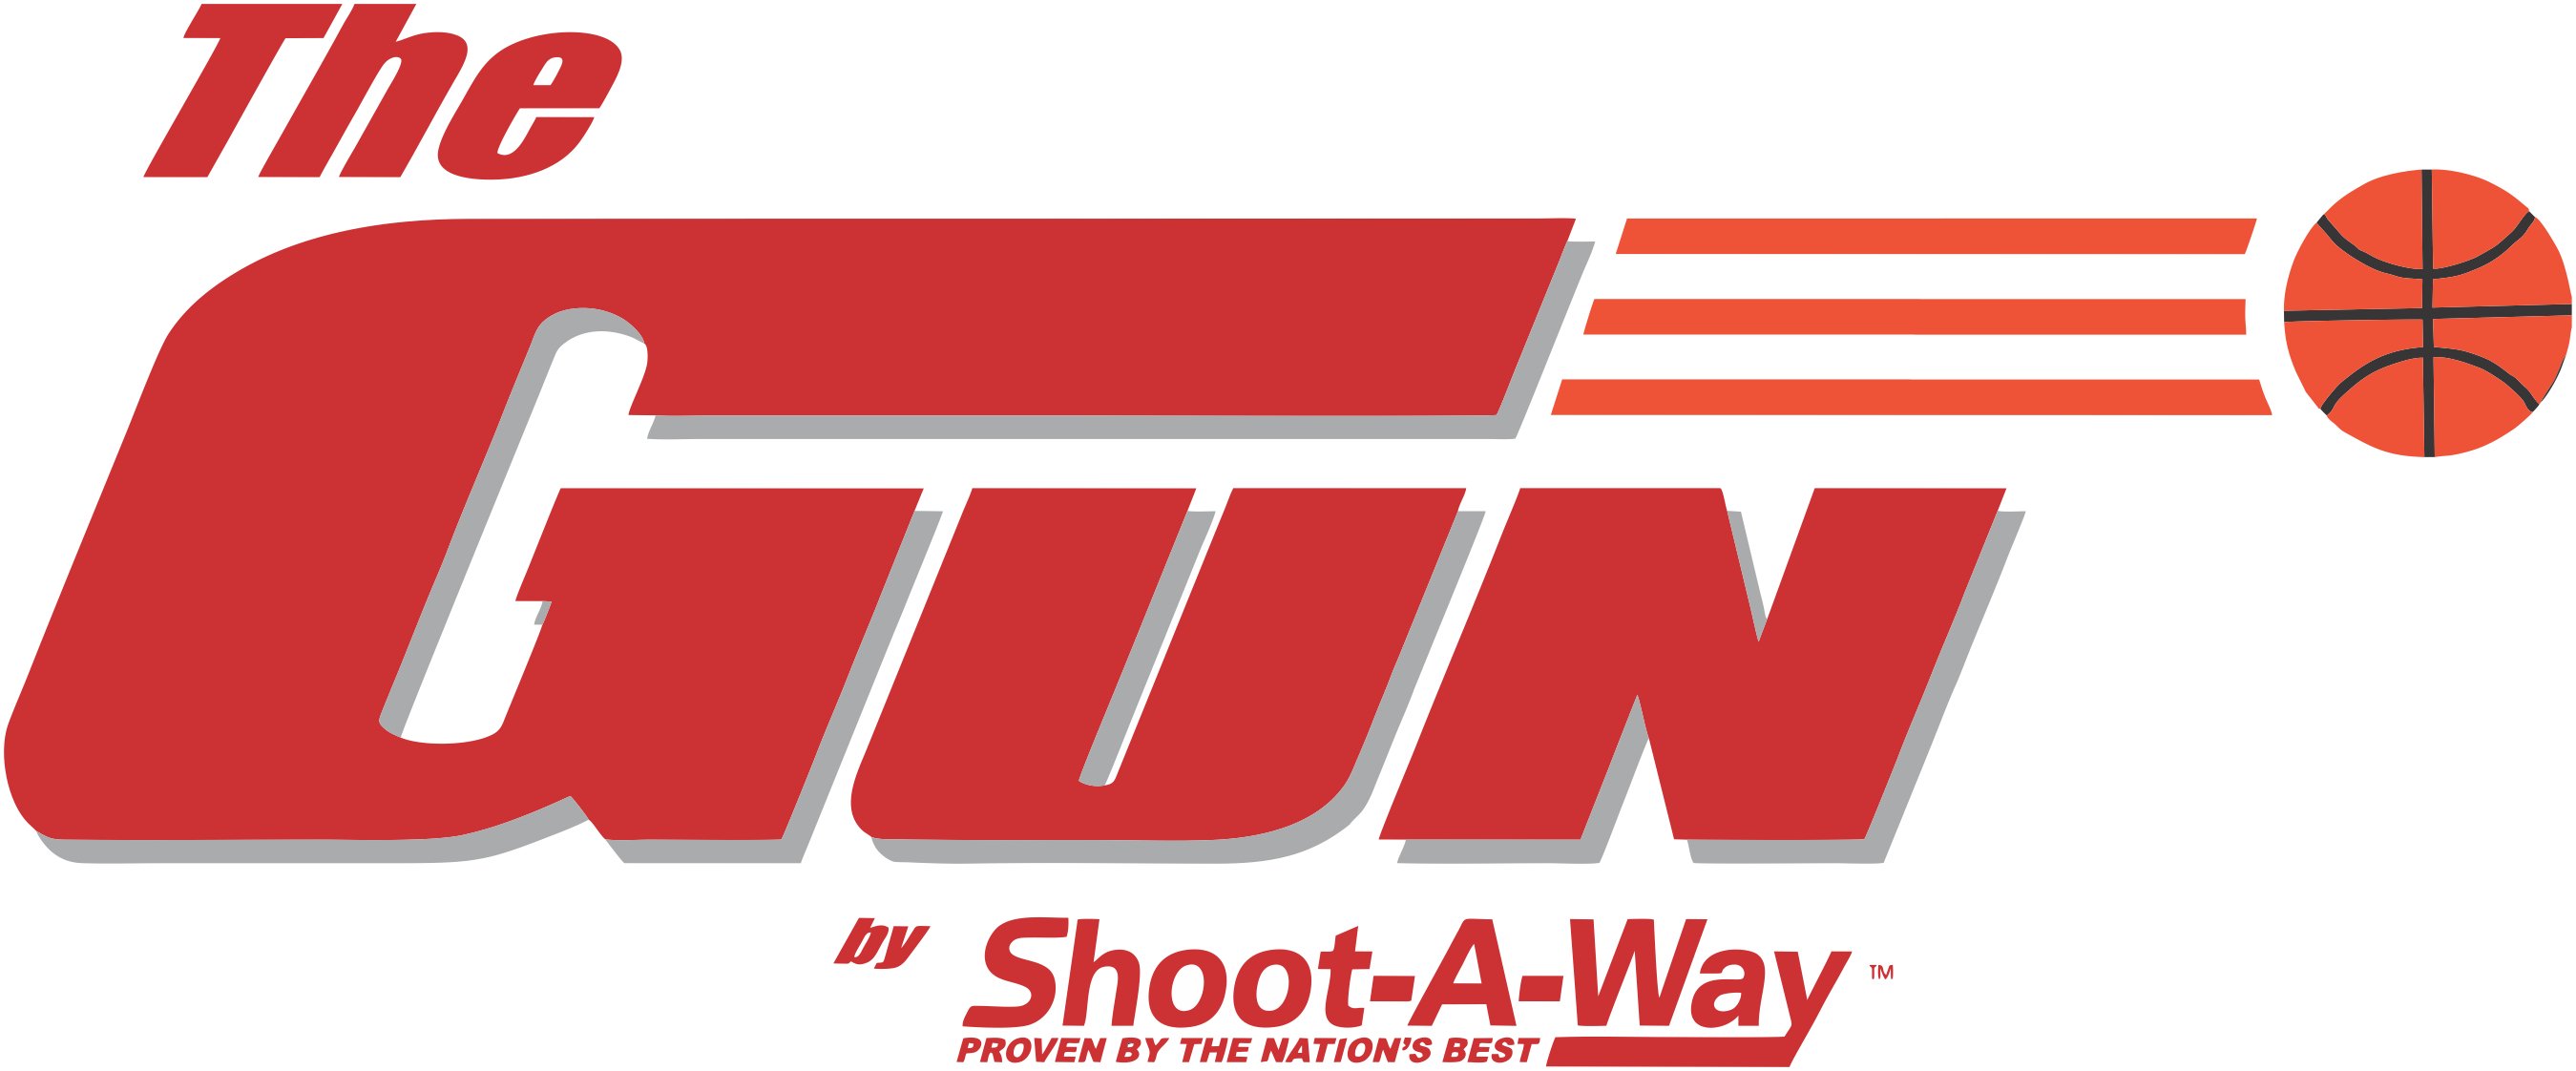 Gun_and_proven redhttps://www.shootaway.com/?utm_source=website&utm_medium=logo&utm_campaign=nhsbca